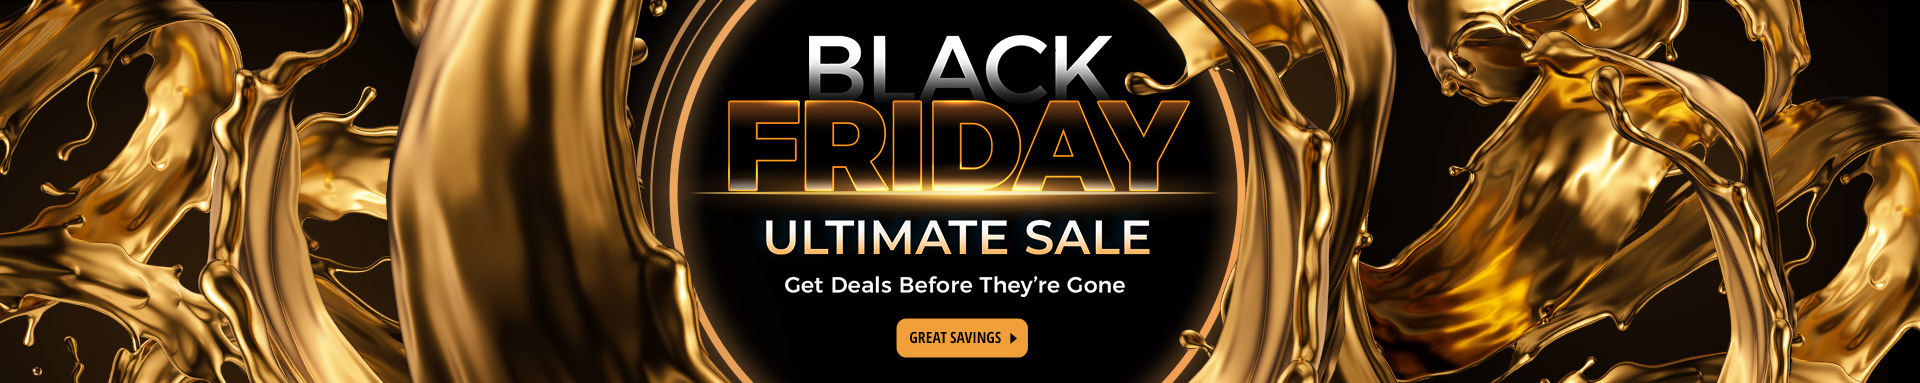 Black Friday Ultimate Sale 